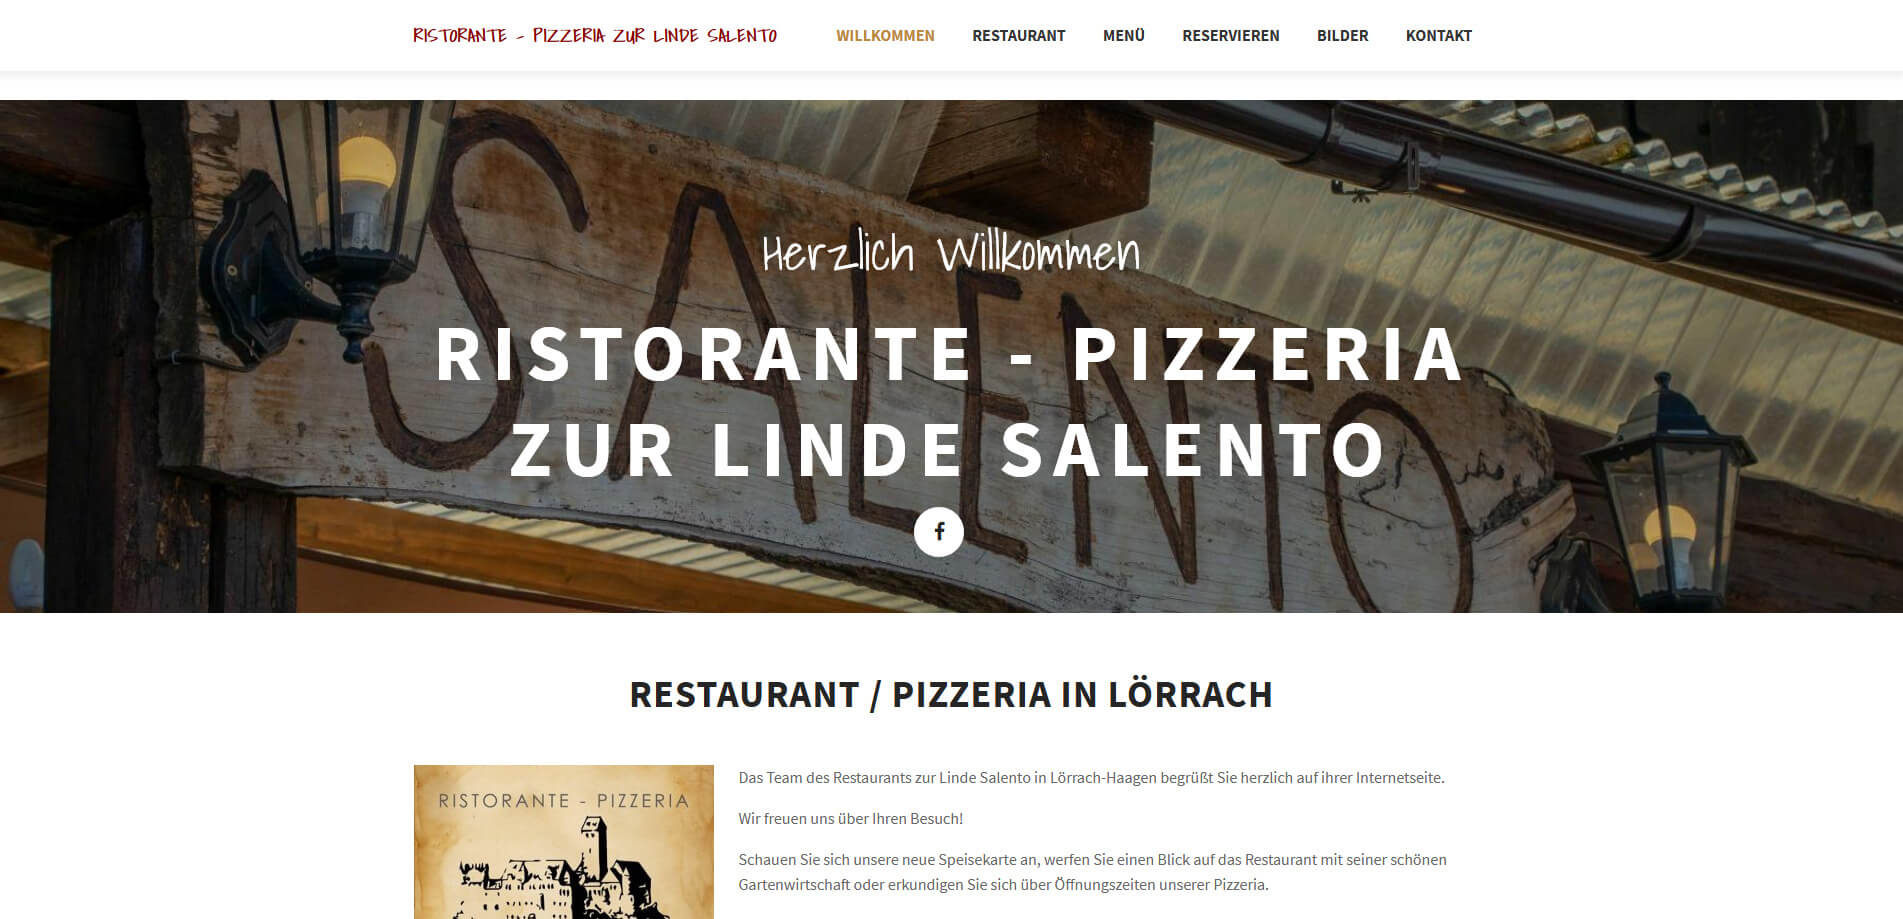 Ristorante - Pizzeria zur Linde Salento